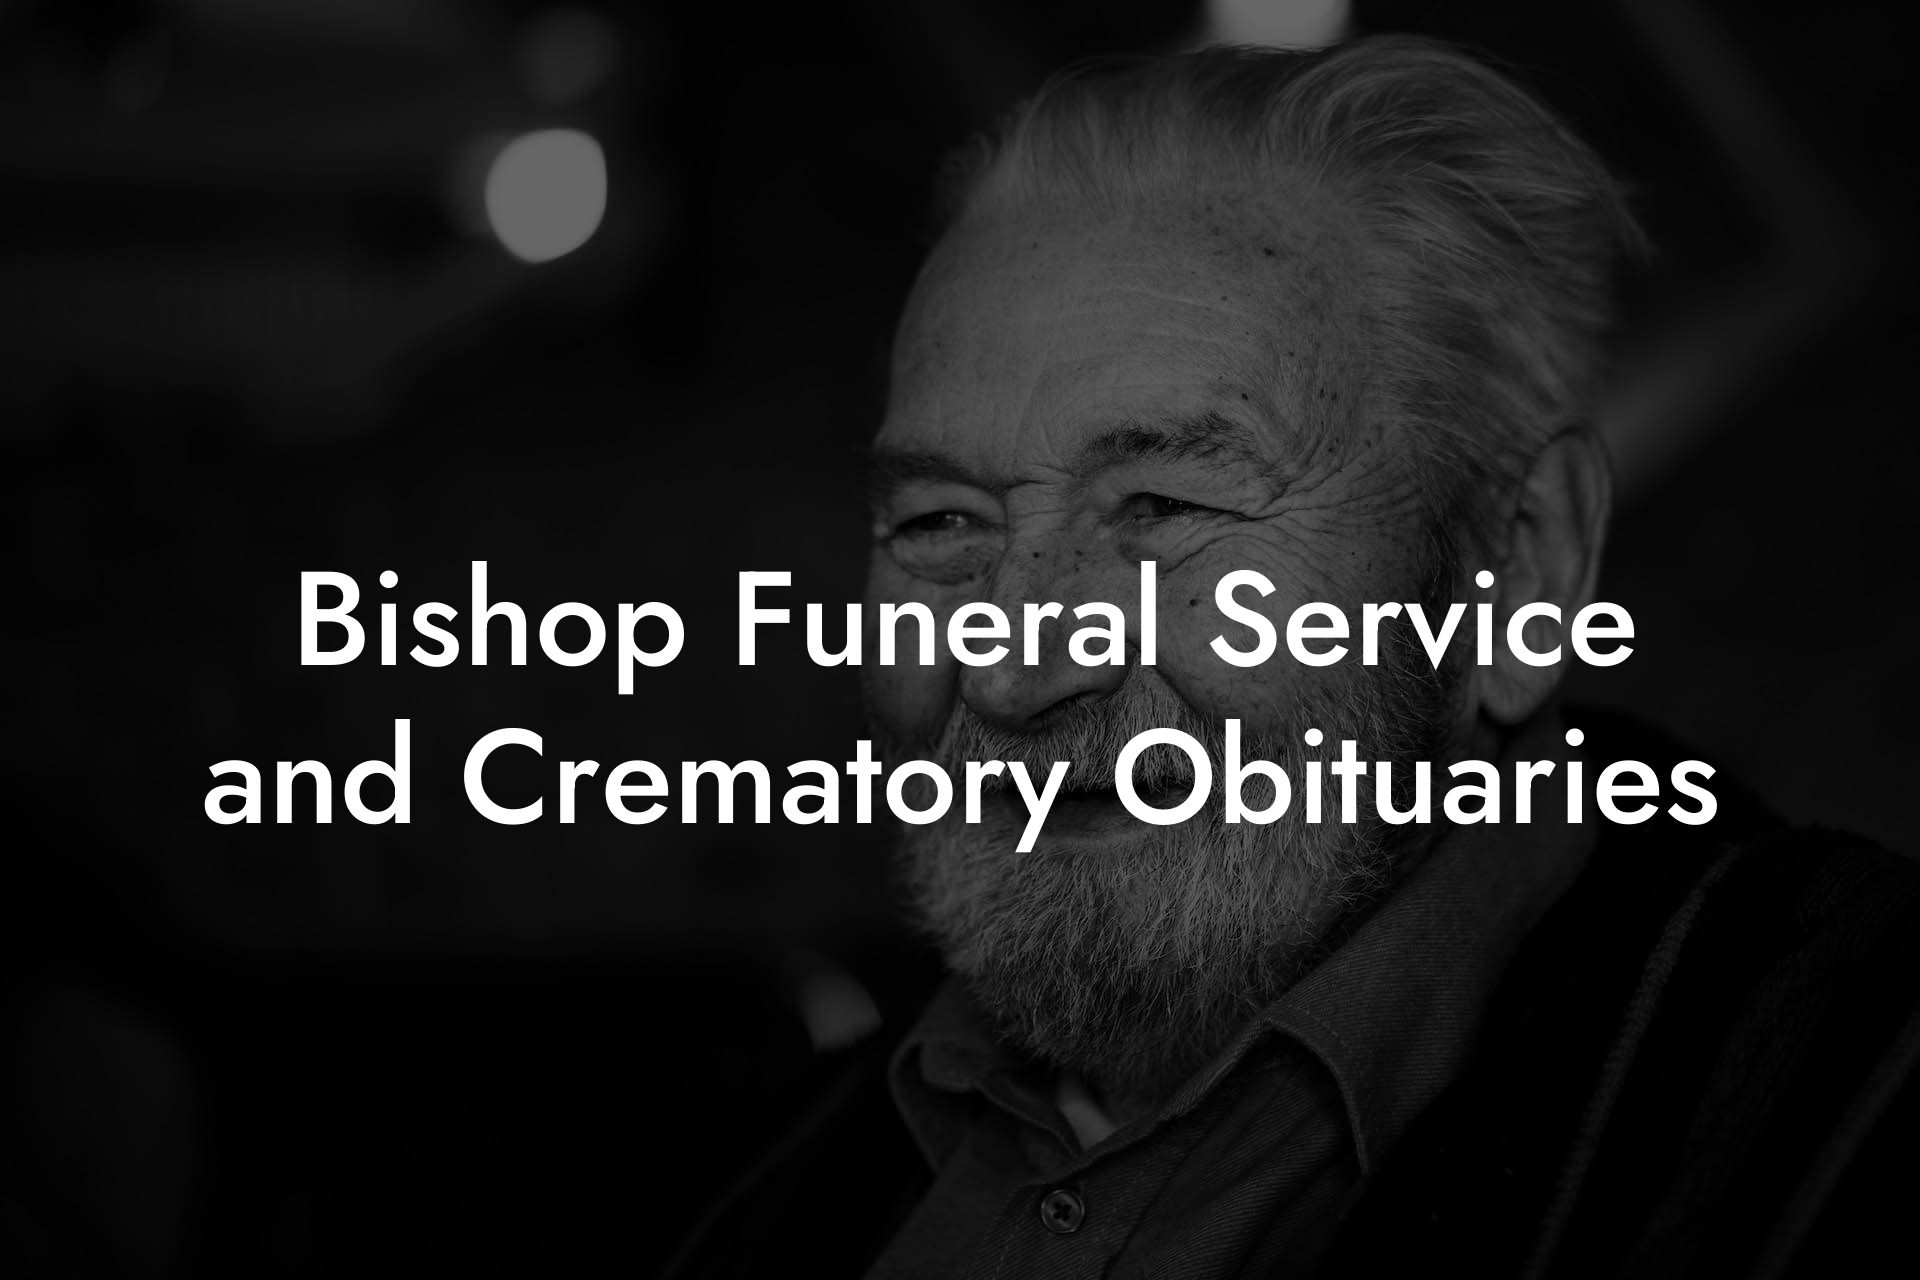 Bishop Funeral Service and Crematory Obituaries